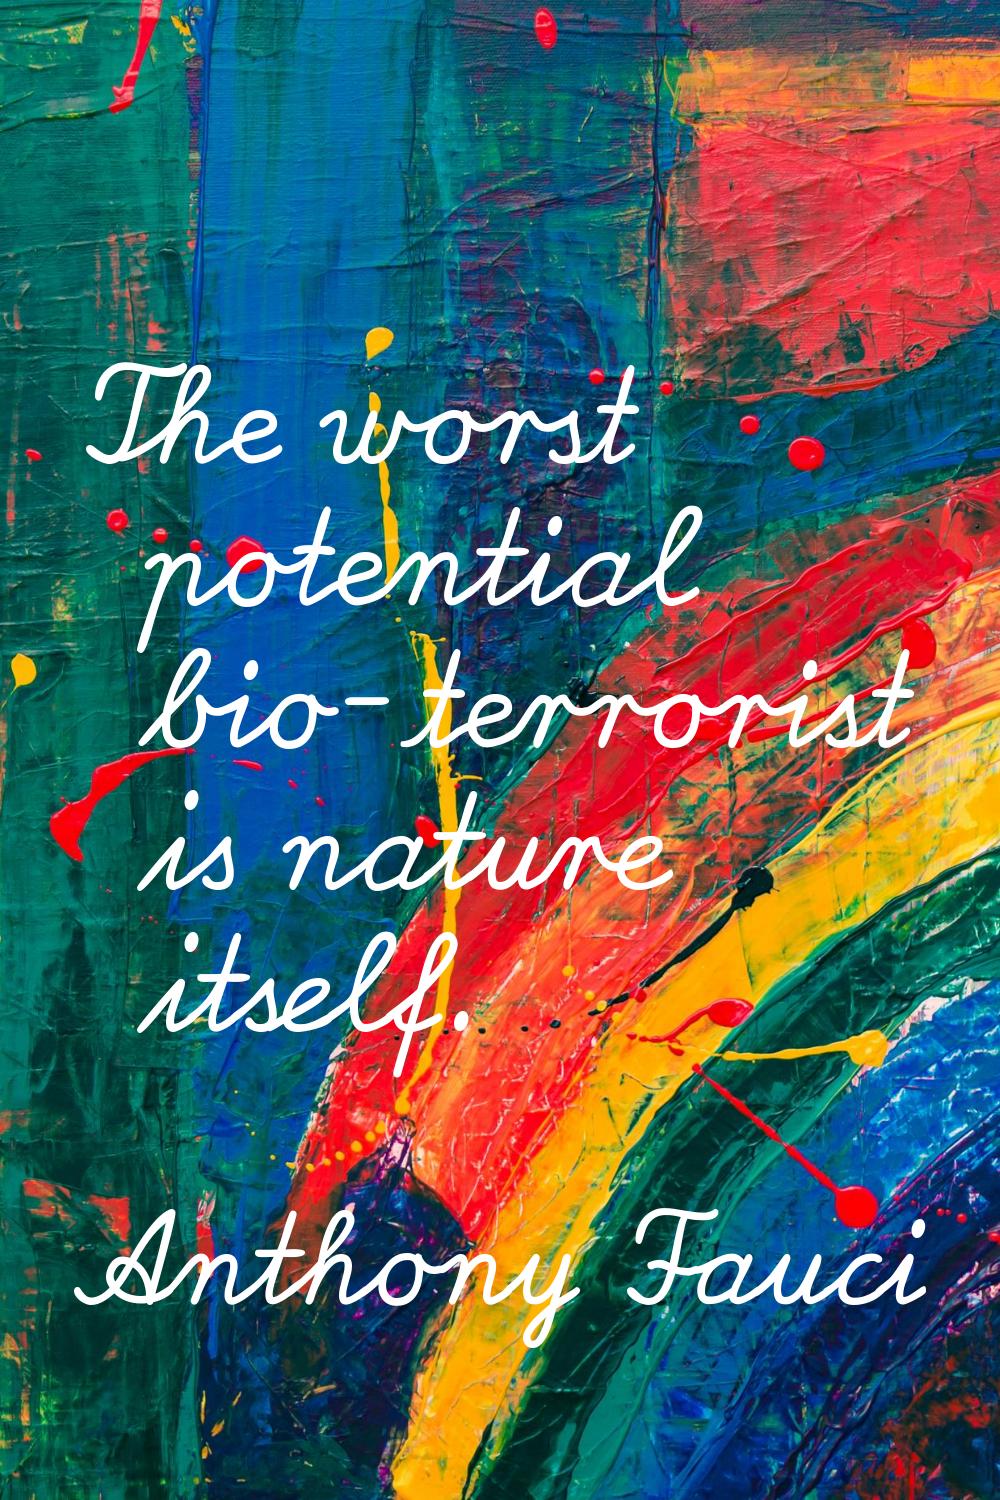 The worst potential bio-terrorist is nature itself.